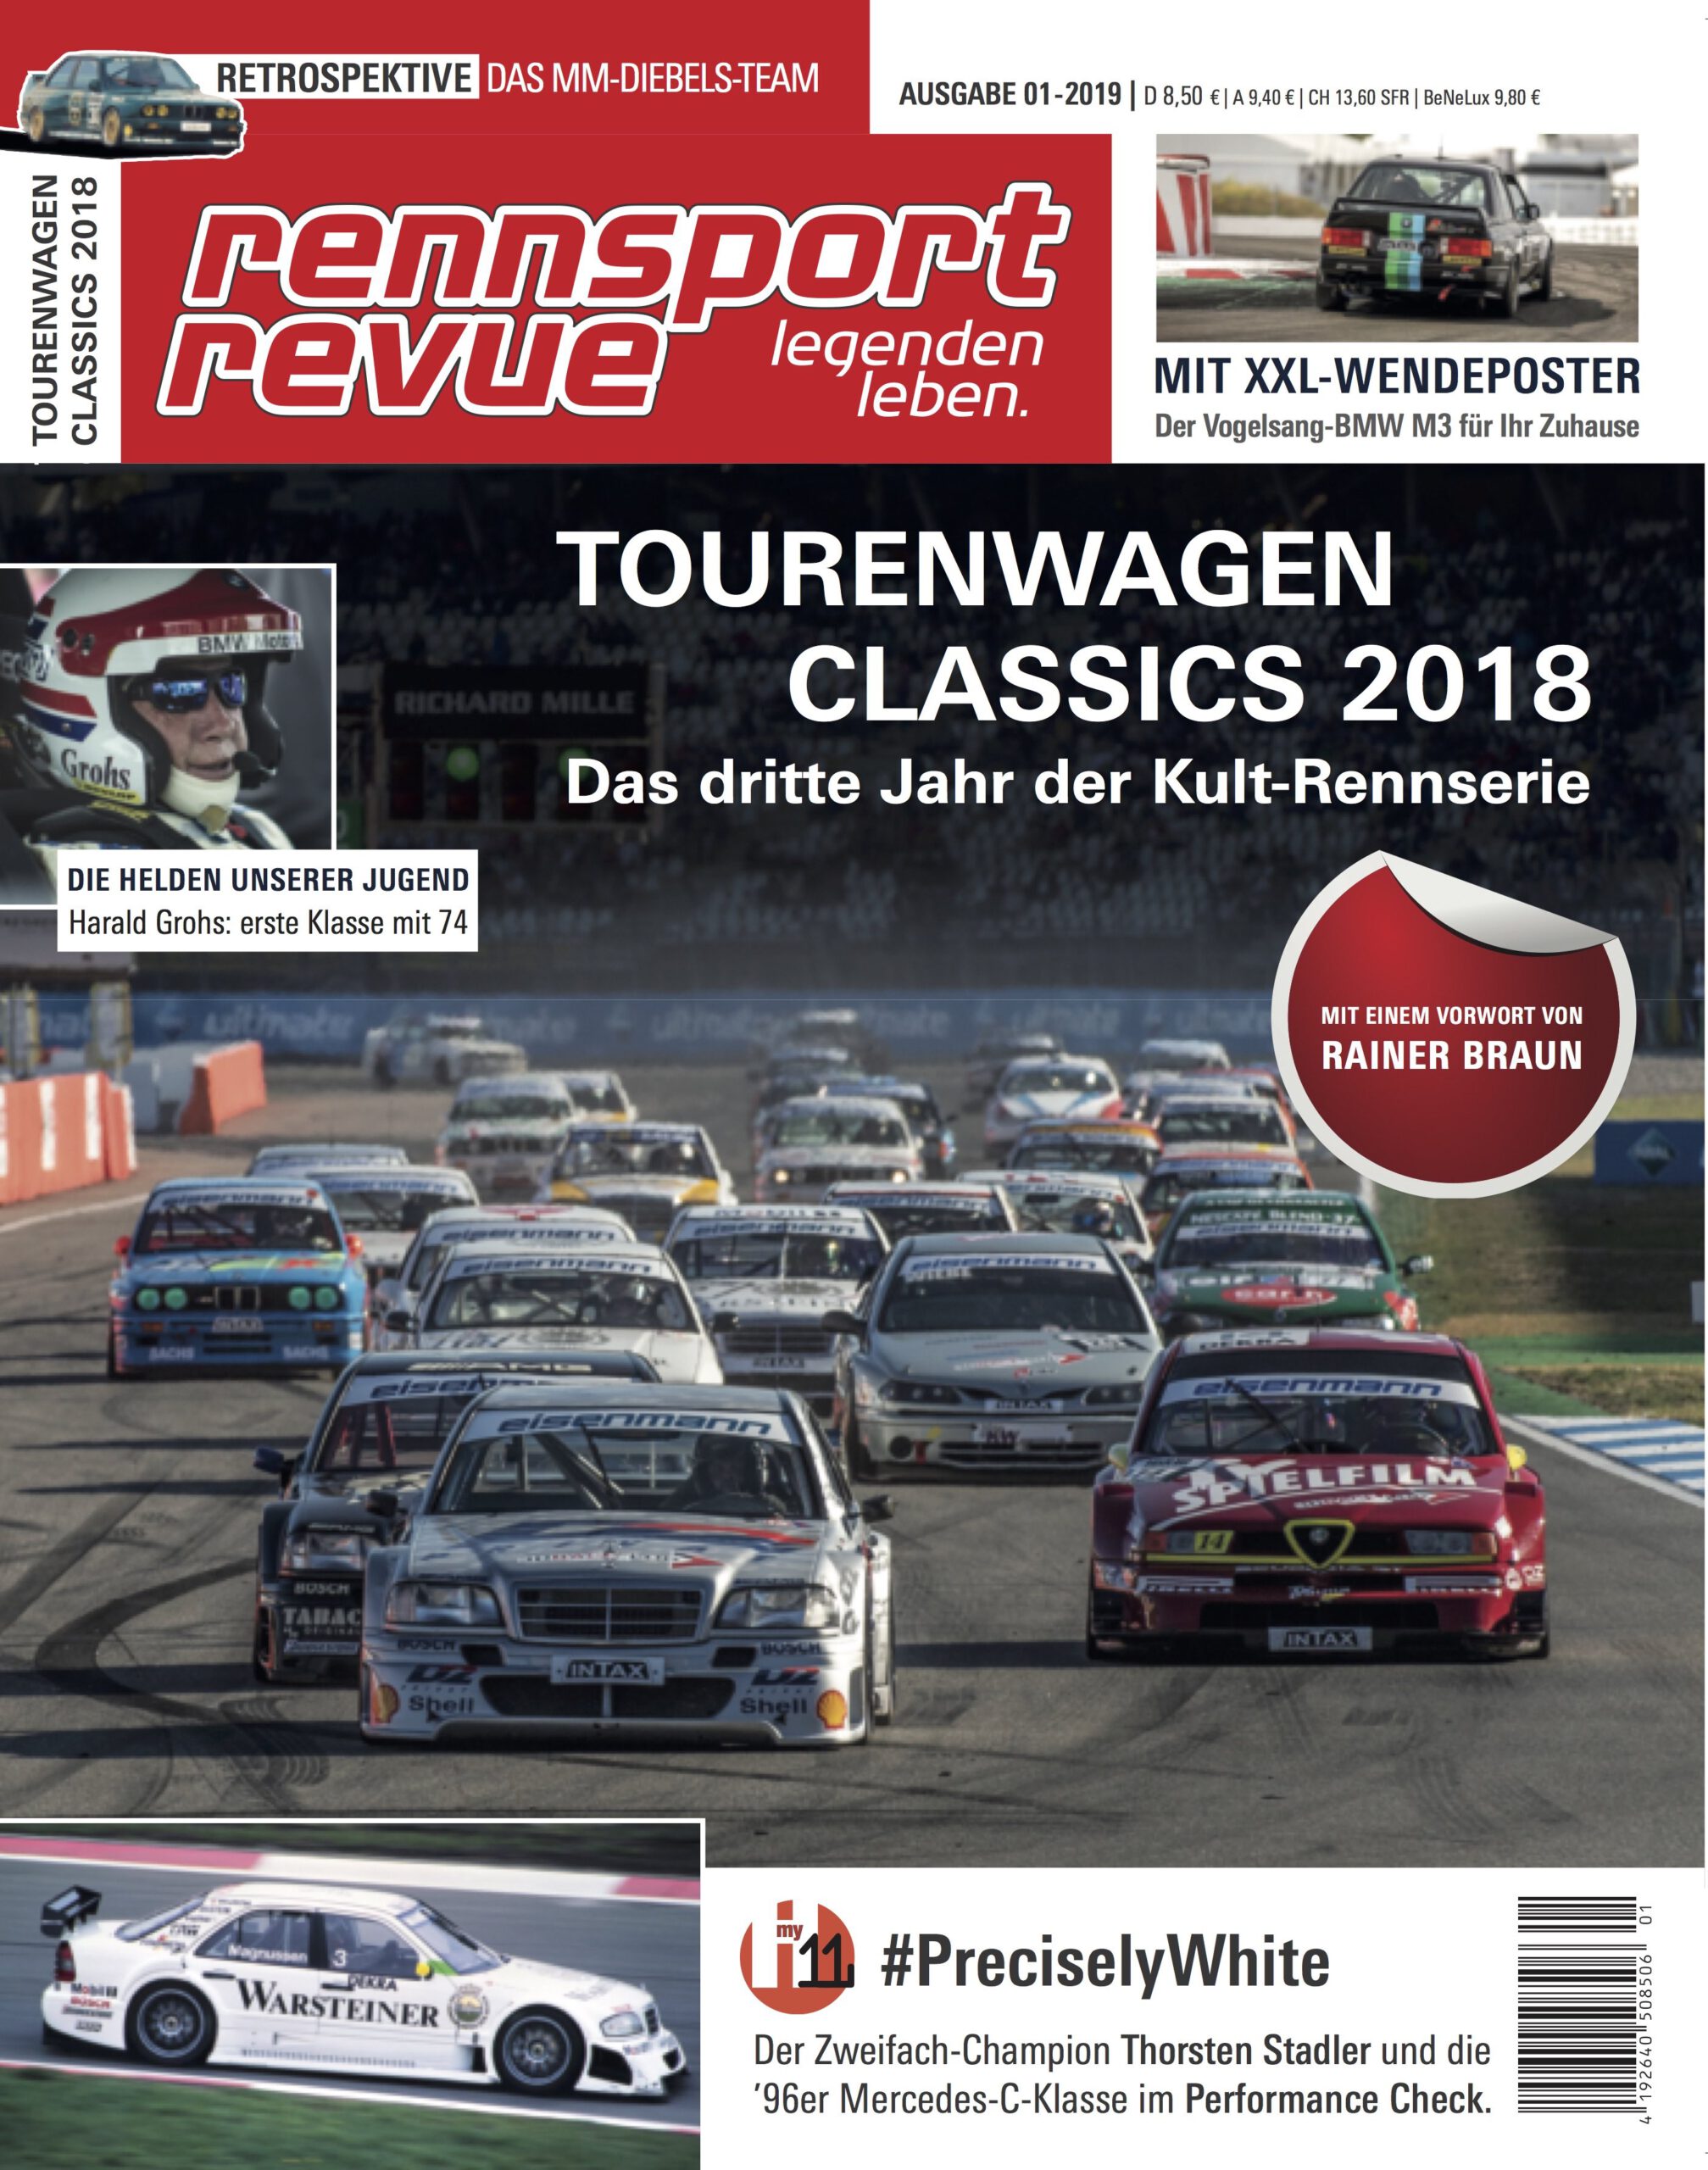 rennsport revue® | legenden leben. Sonderausgabe Tourenwagen Classics 2018